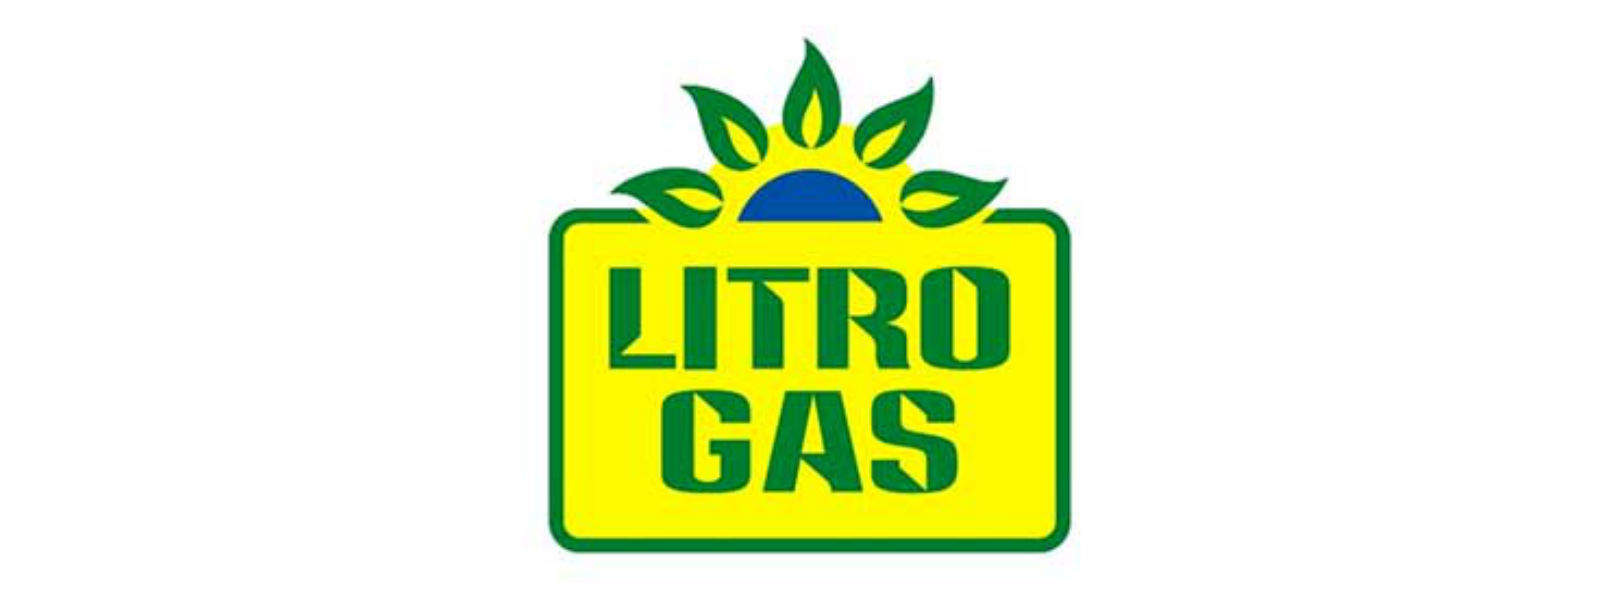 NO Gas Distribution on Wednesday (8)